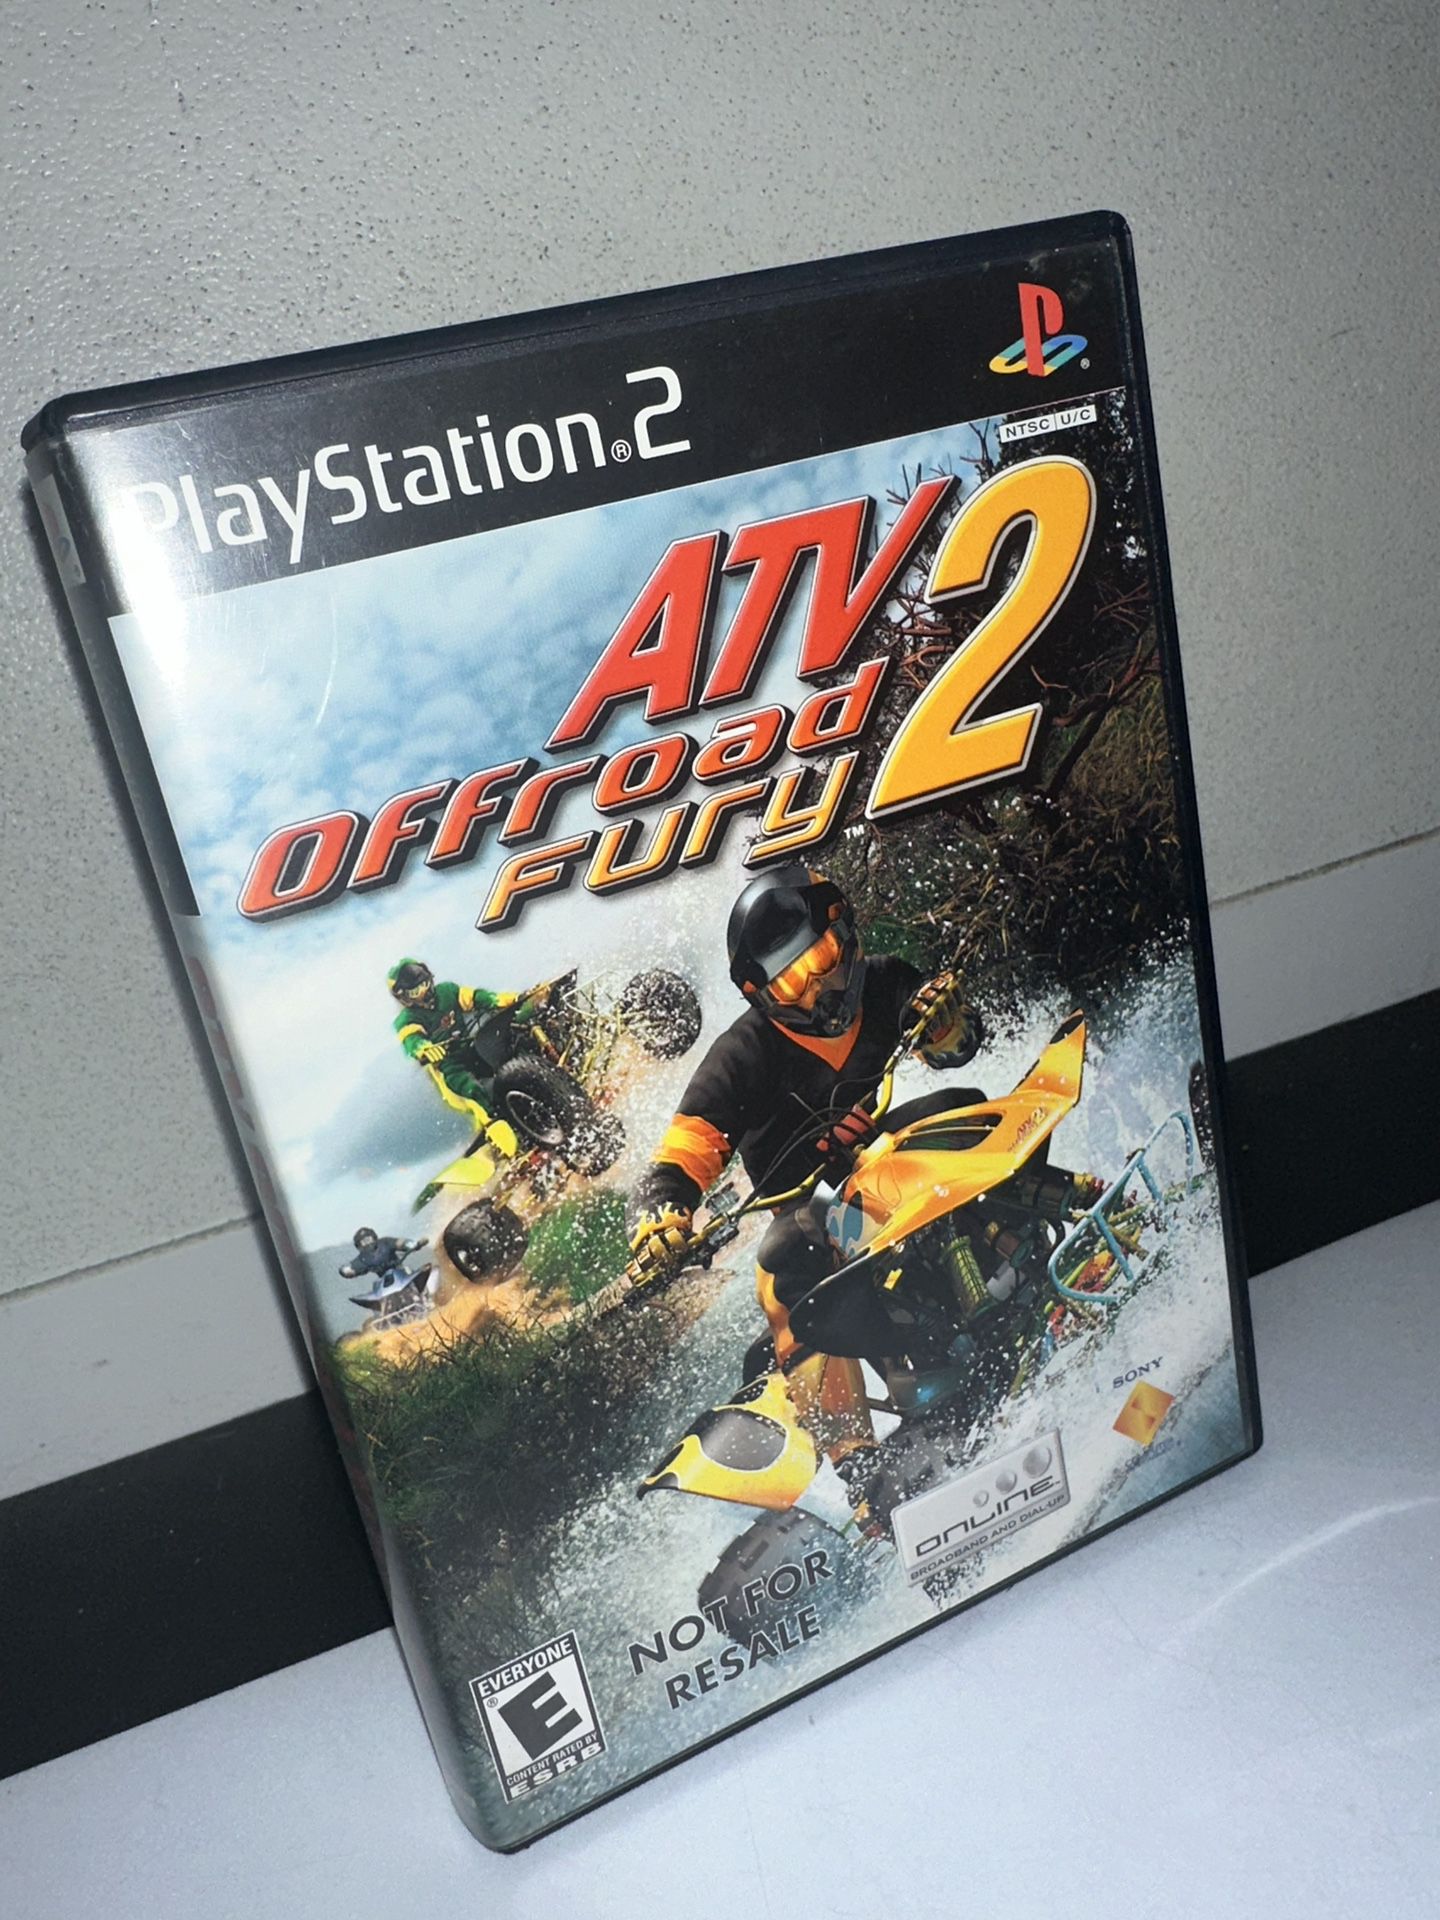 ATV Offroad Fury 2 PS2 PlayStation 2 - Complete CIB w/ Manual